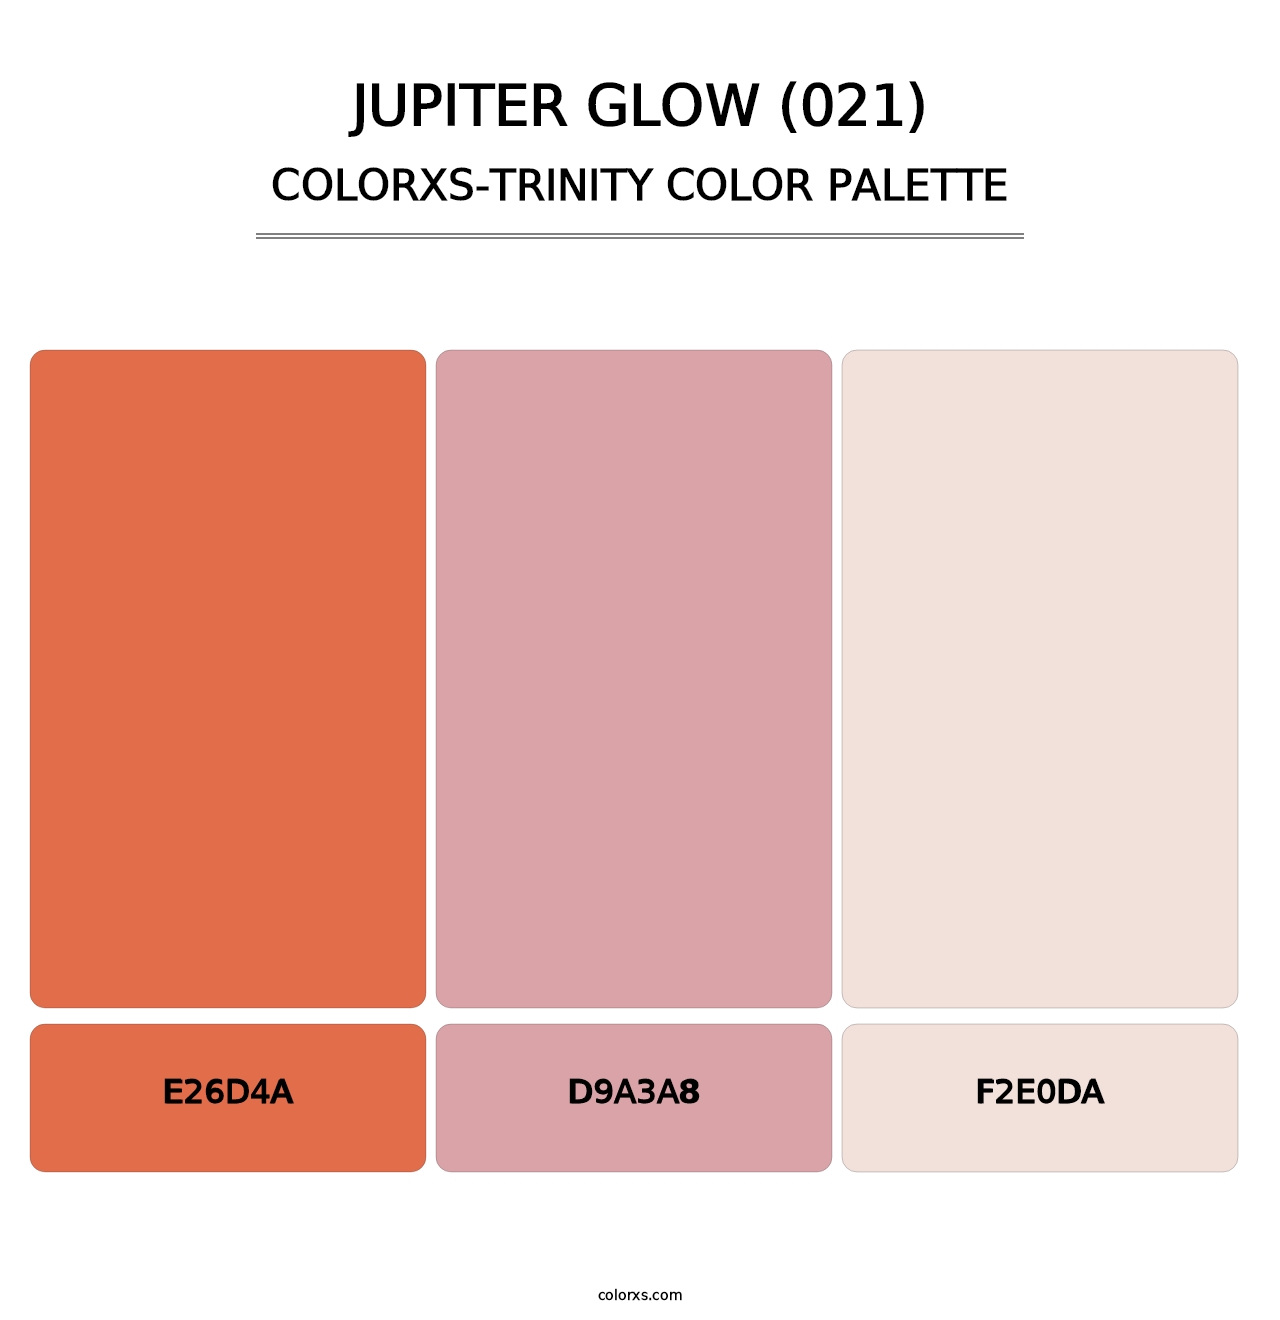 Jupiter Glow (021) - Colorxs Trinity Palette